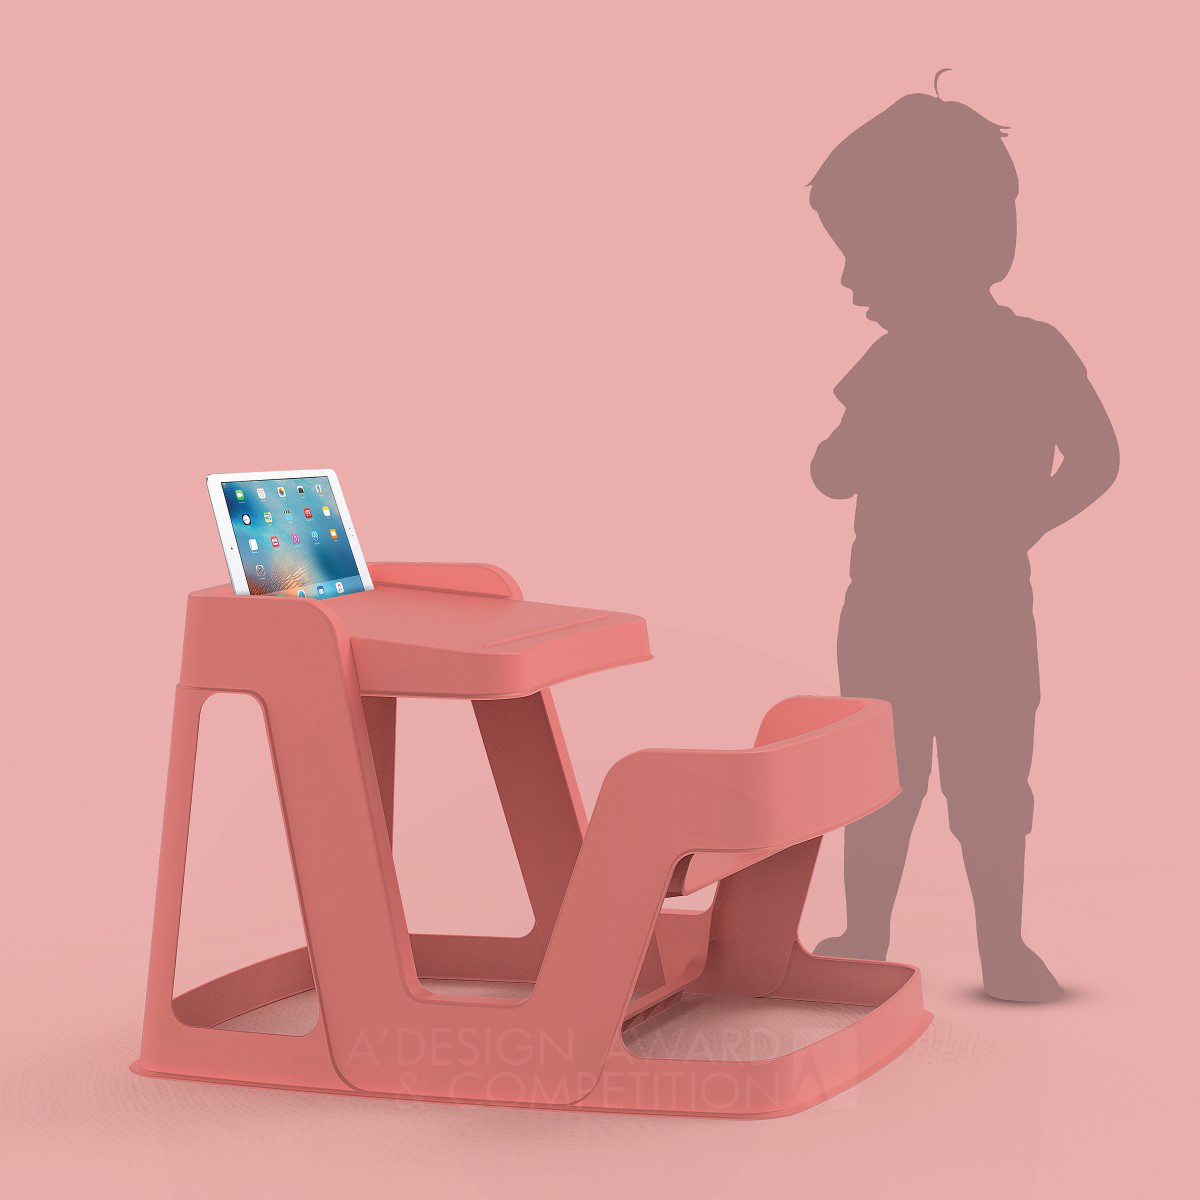 Paradiso First Desk Baby Desk for Creative Development by david dos santos